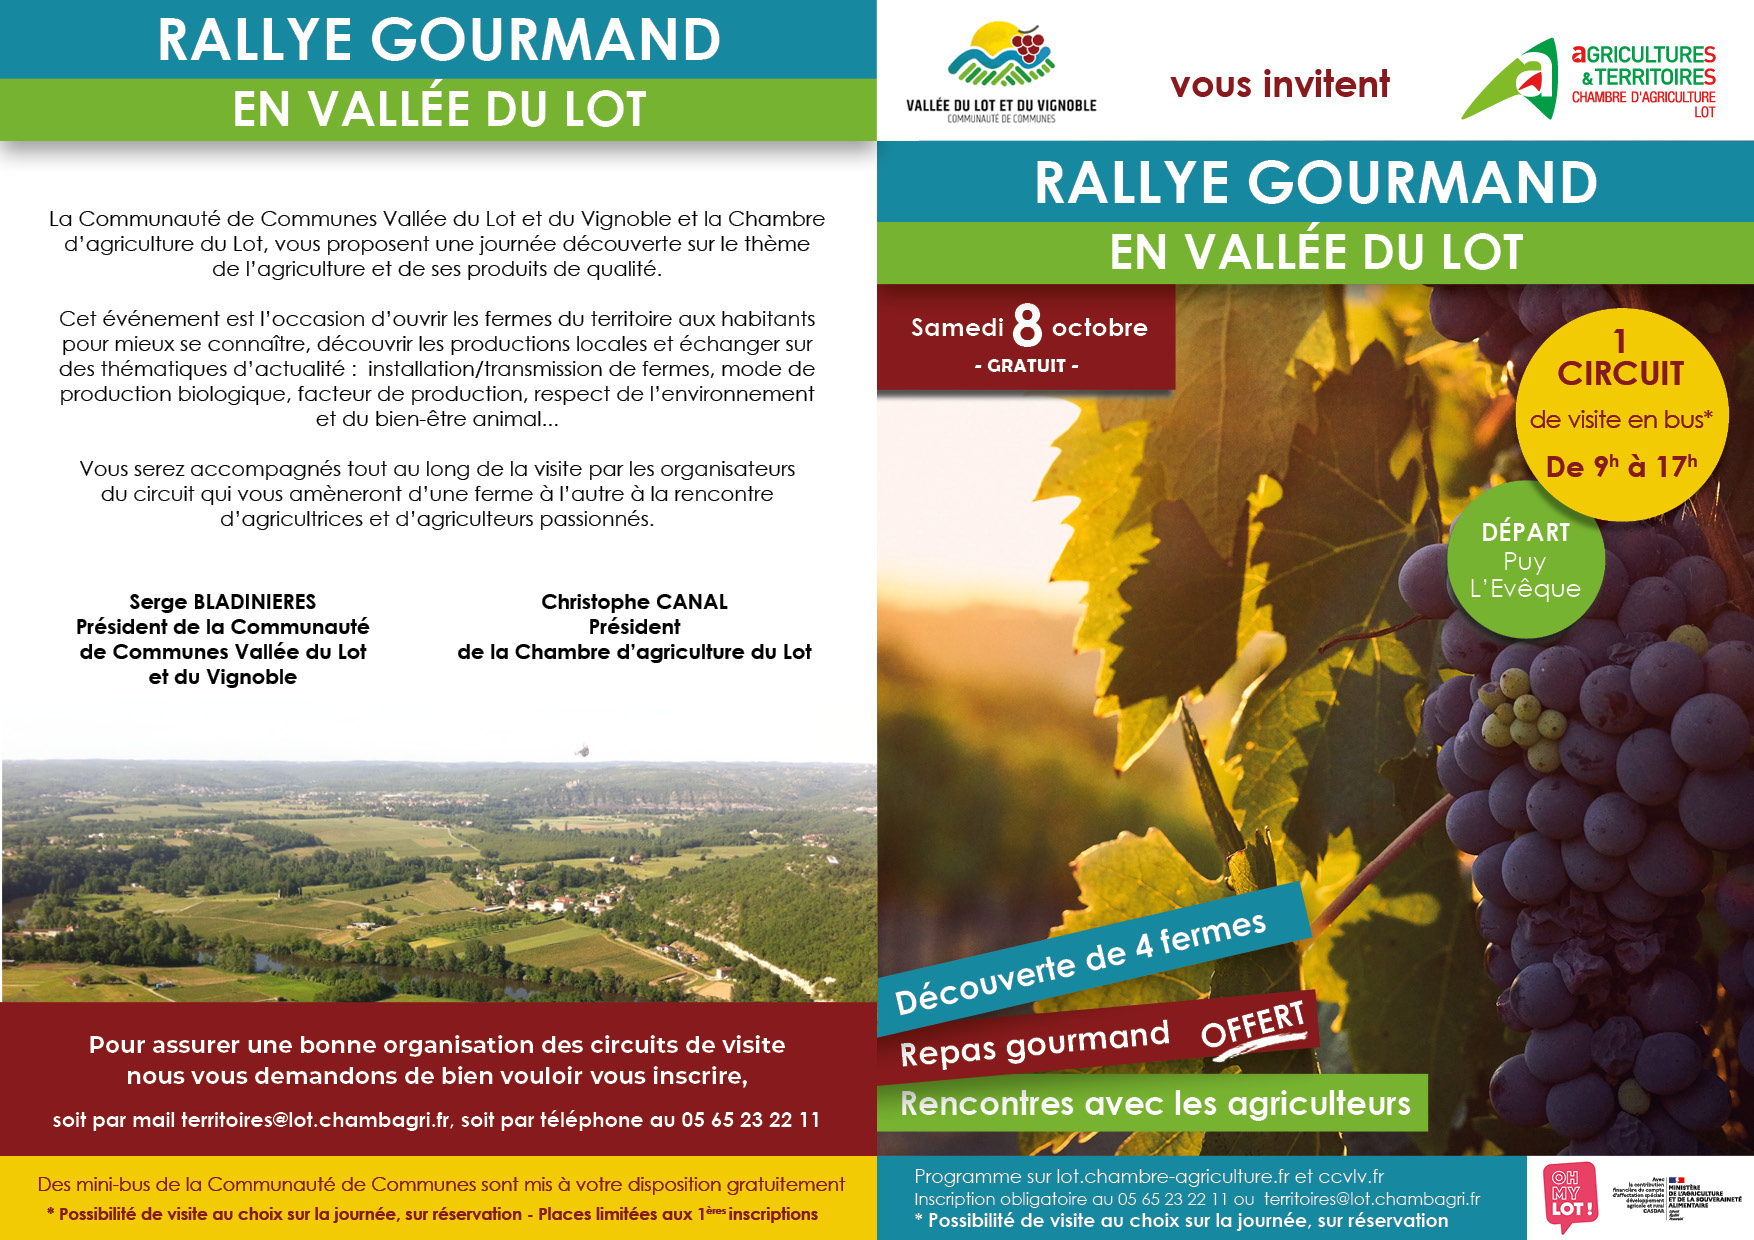 Ce samedi 8 octobre : Rallye Gourmand en vallée du Lot